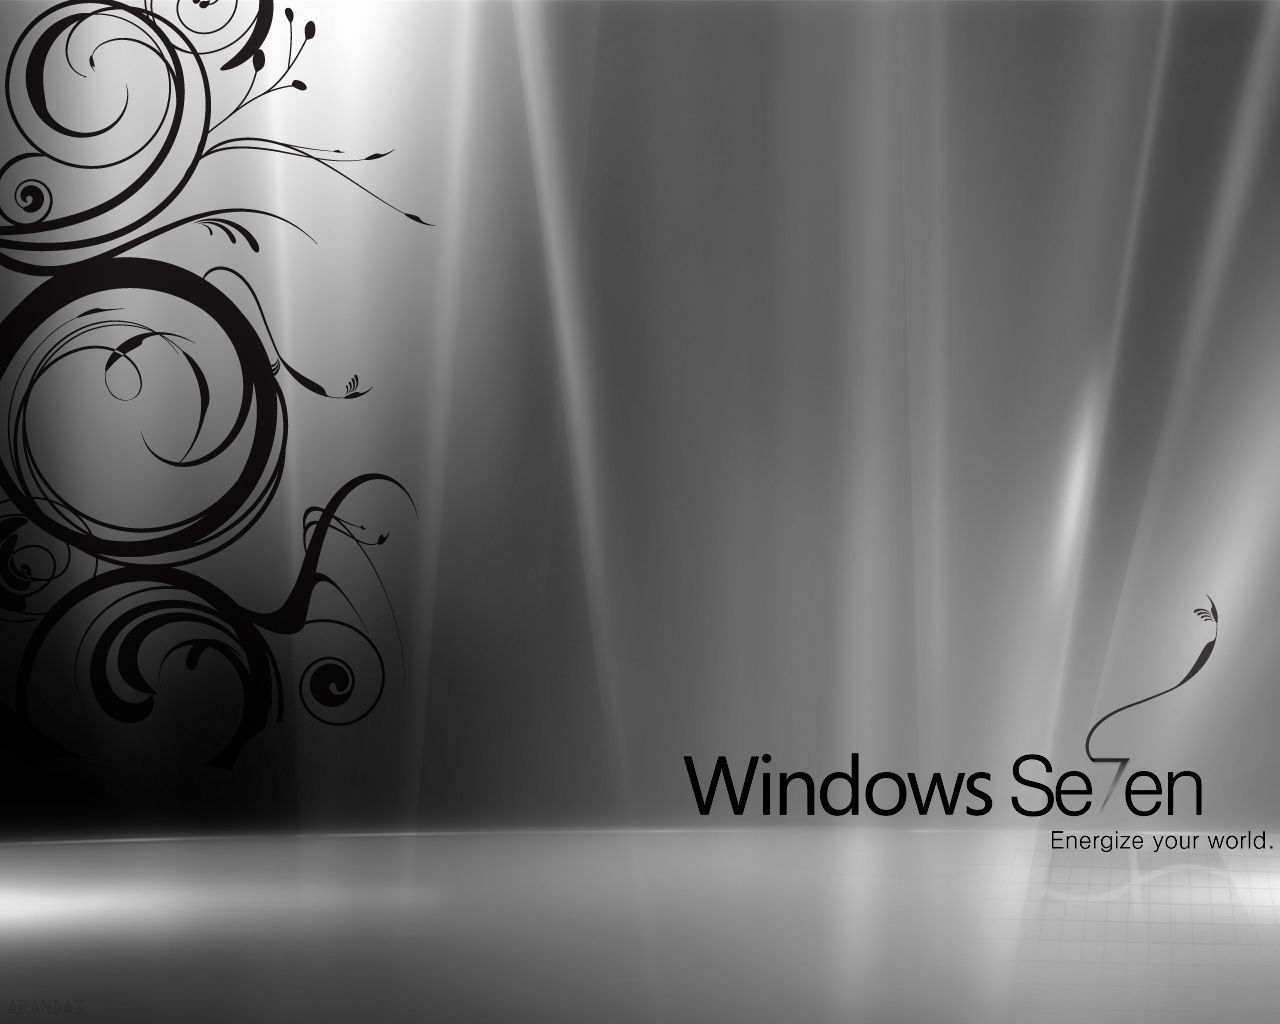 Windows 7 Ultimat Wallpapers